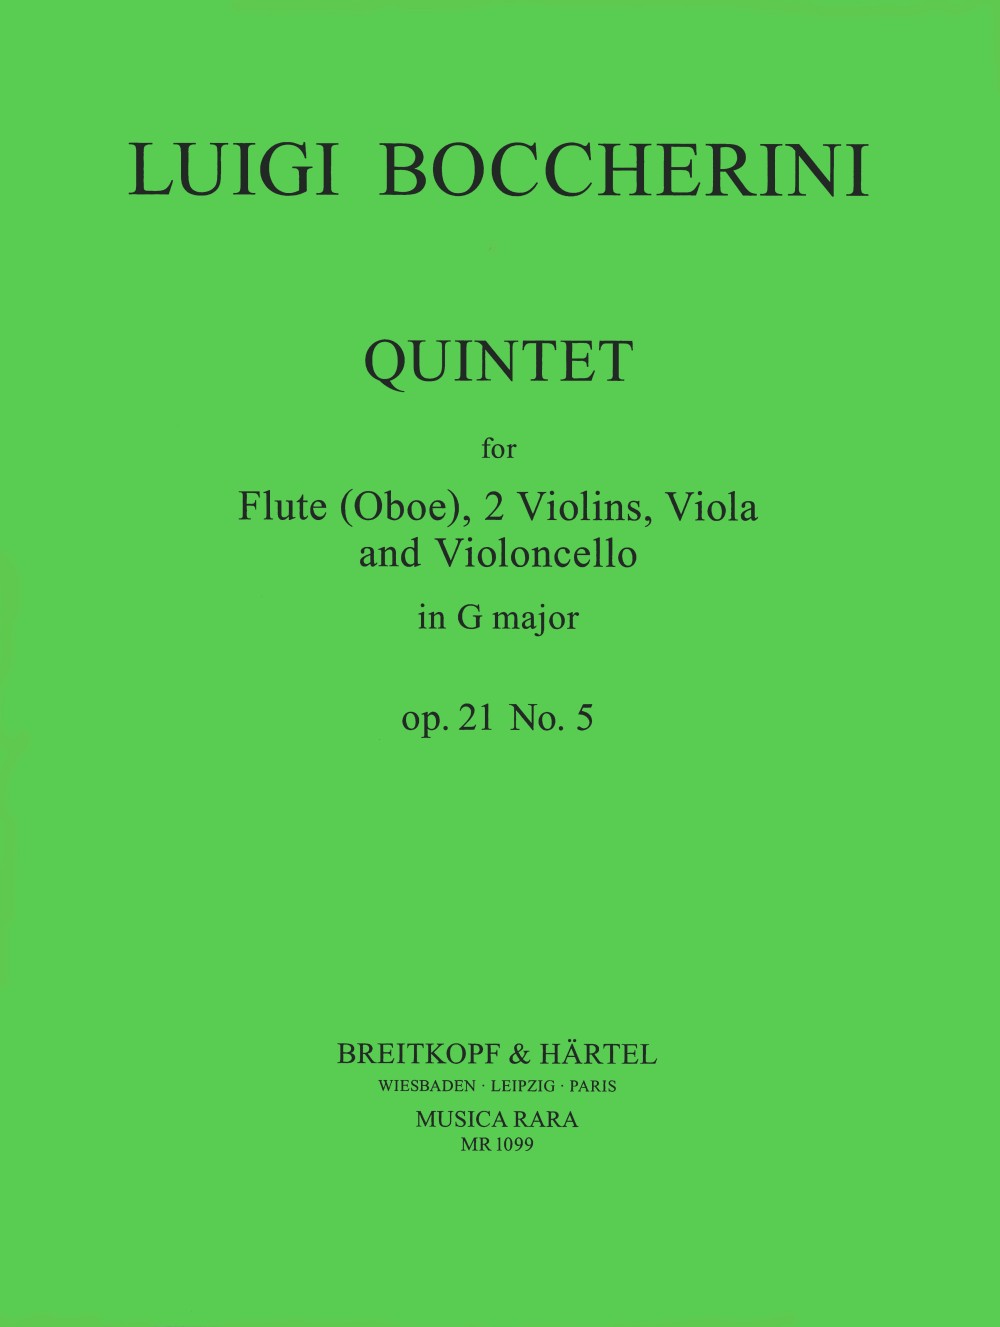 Boccherini: Flute Quintet No. 5 in G Major, G 441